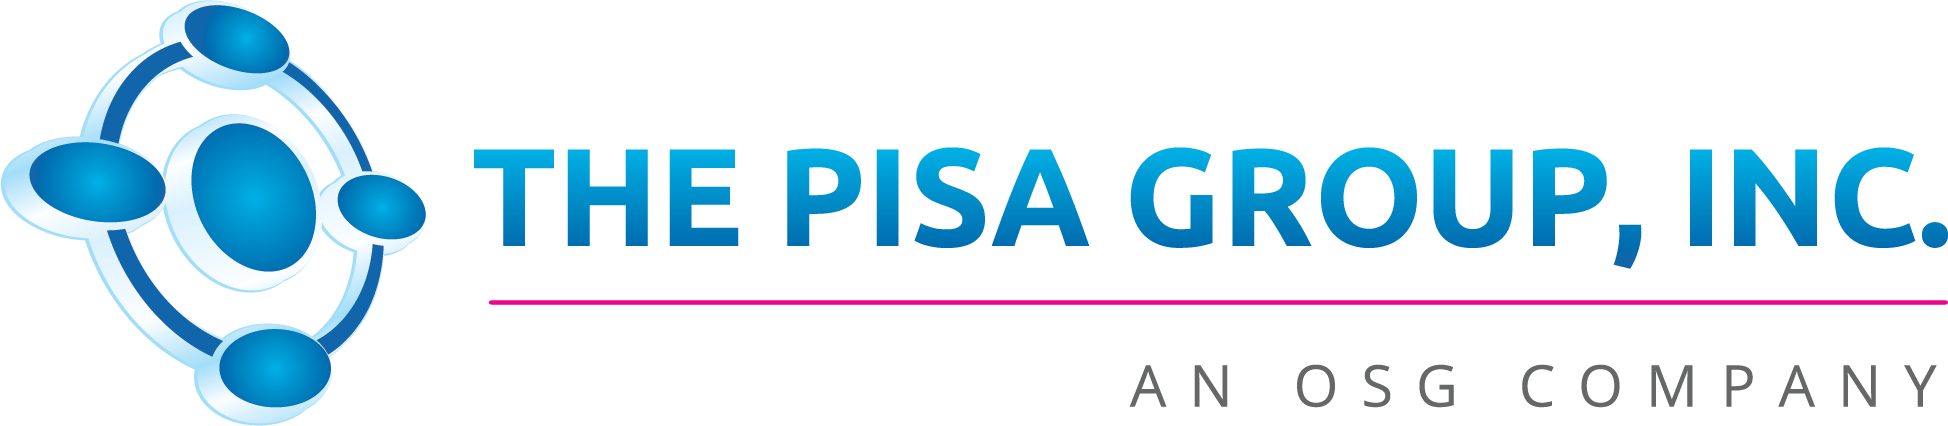 The Pisa Group Inc logo